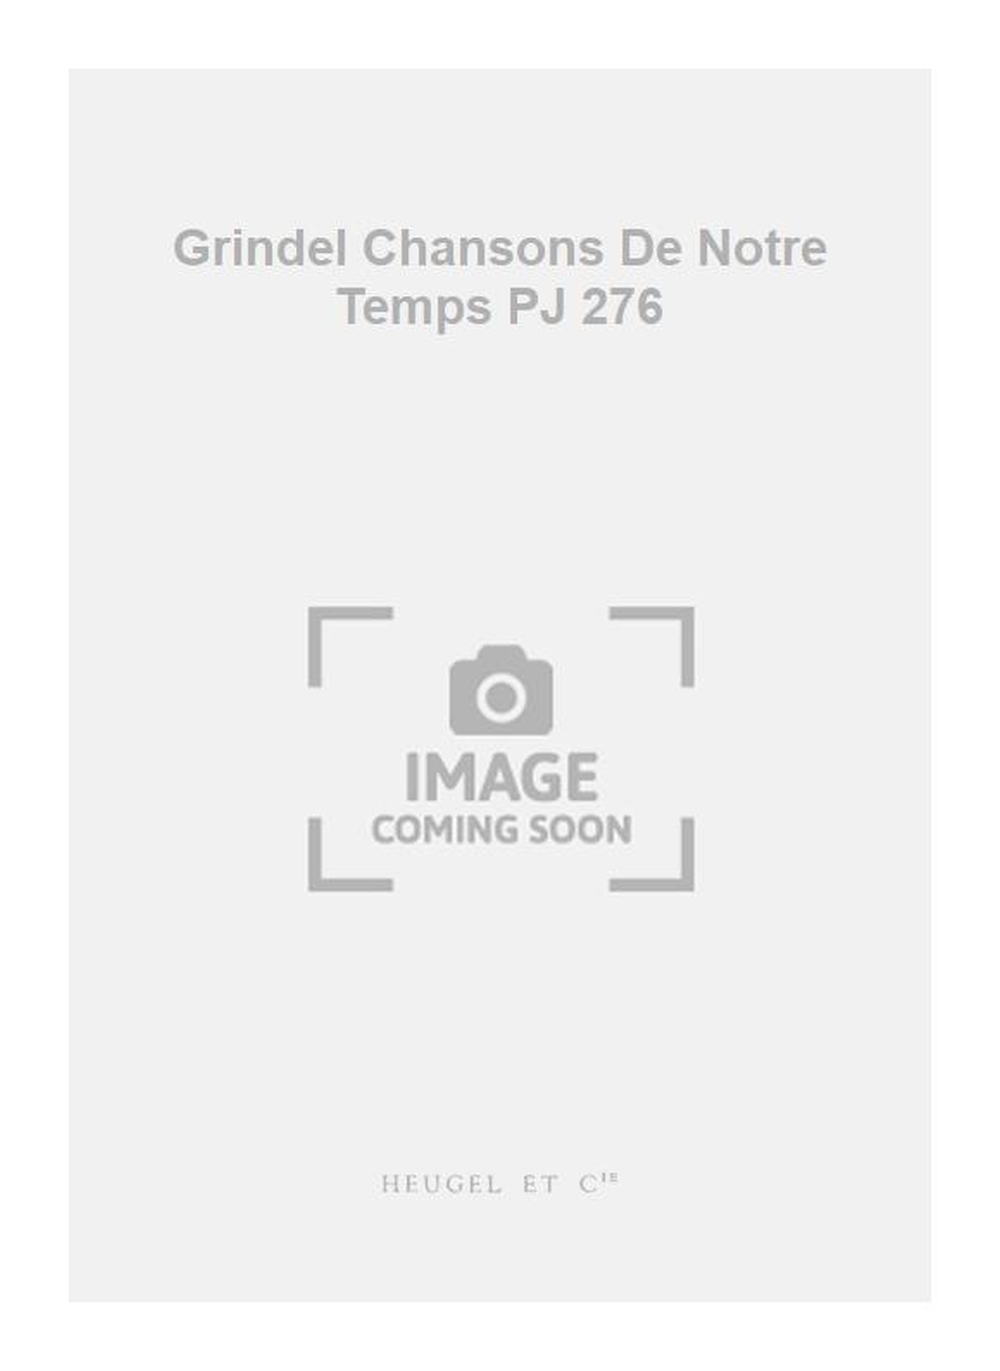 Jacques Brel: Grindel Chansons De Notre Temps PJ 276